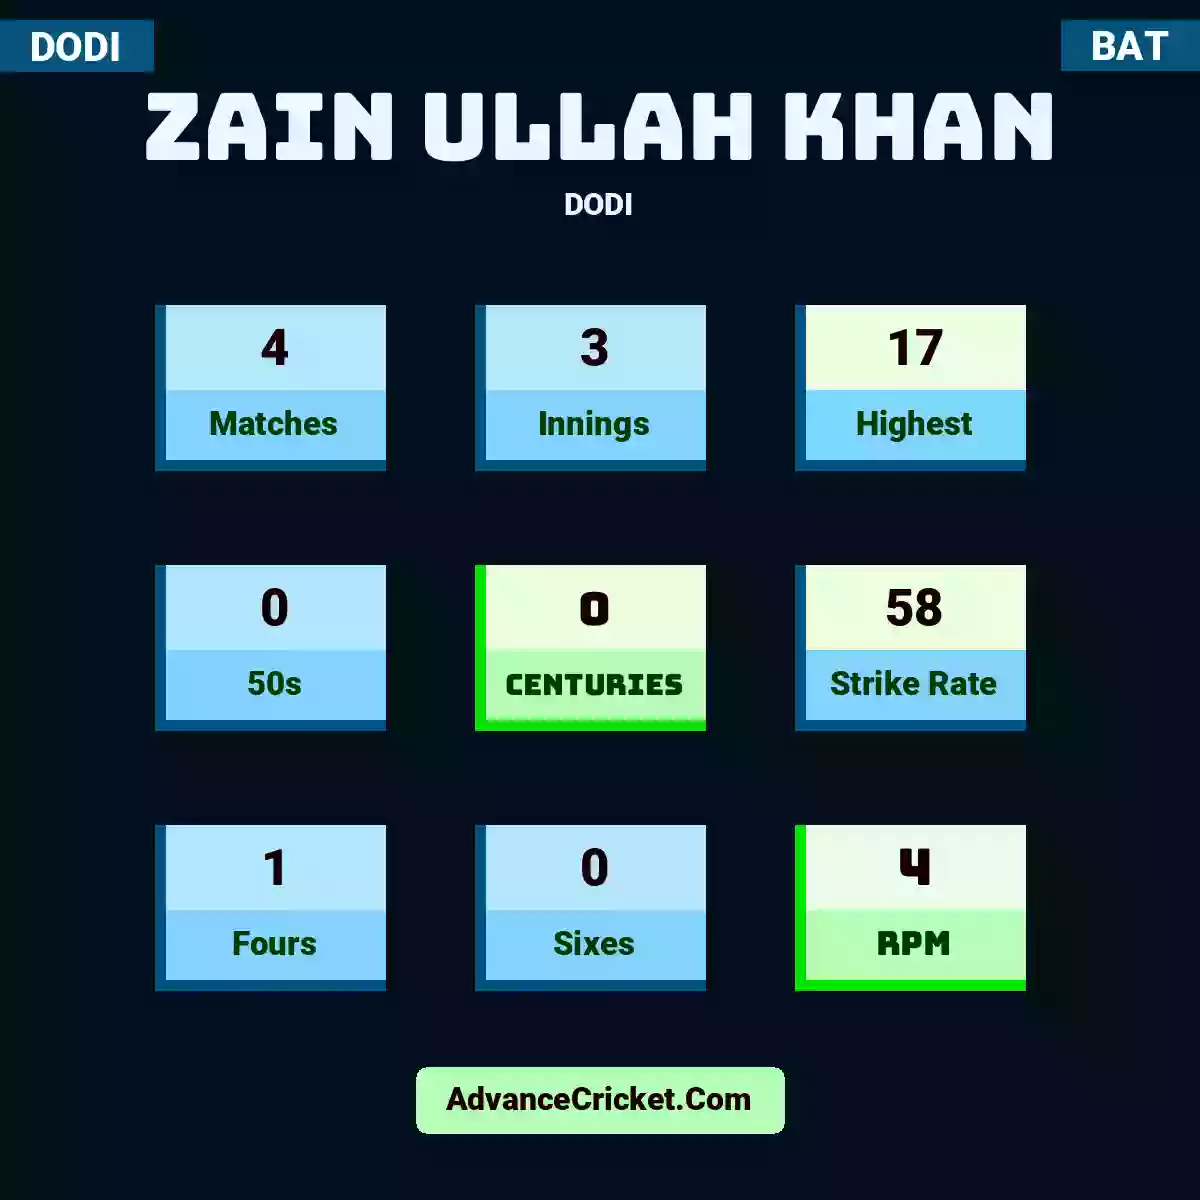 Zain Ullah Khan DODI , Zain Ullah Khan played 4 matches, scored 17 runs as highest, 0 half-centuries, and 0 centuries, with a strike rate of 58. Z.Ullah.Khan hit 1 fours and 0 sixes, with an RPM of 4.